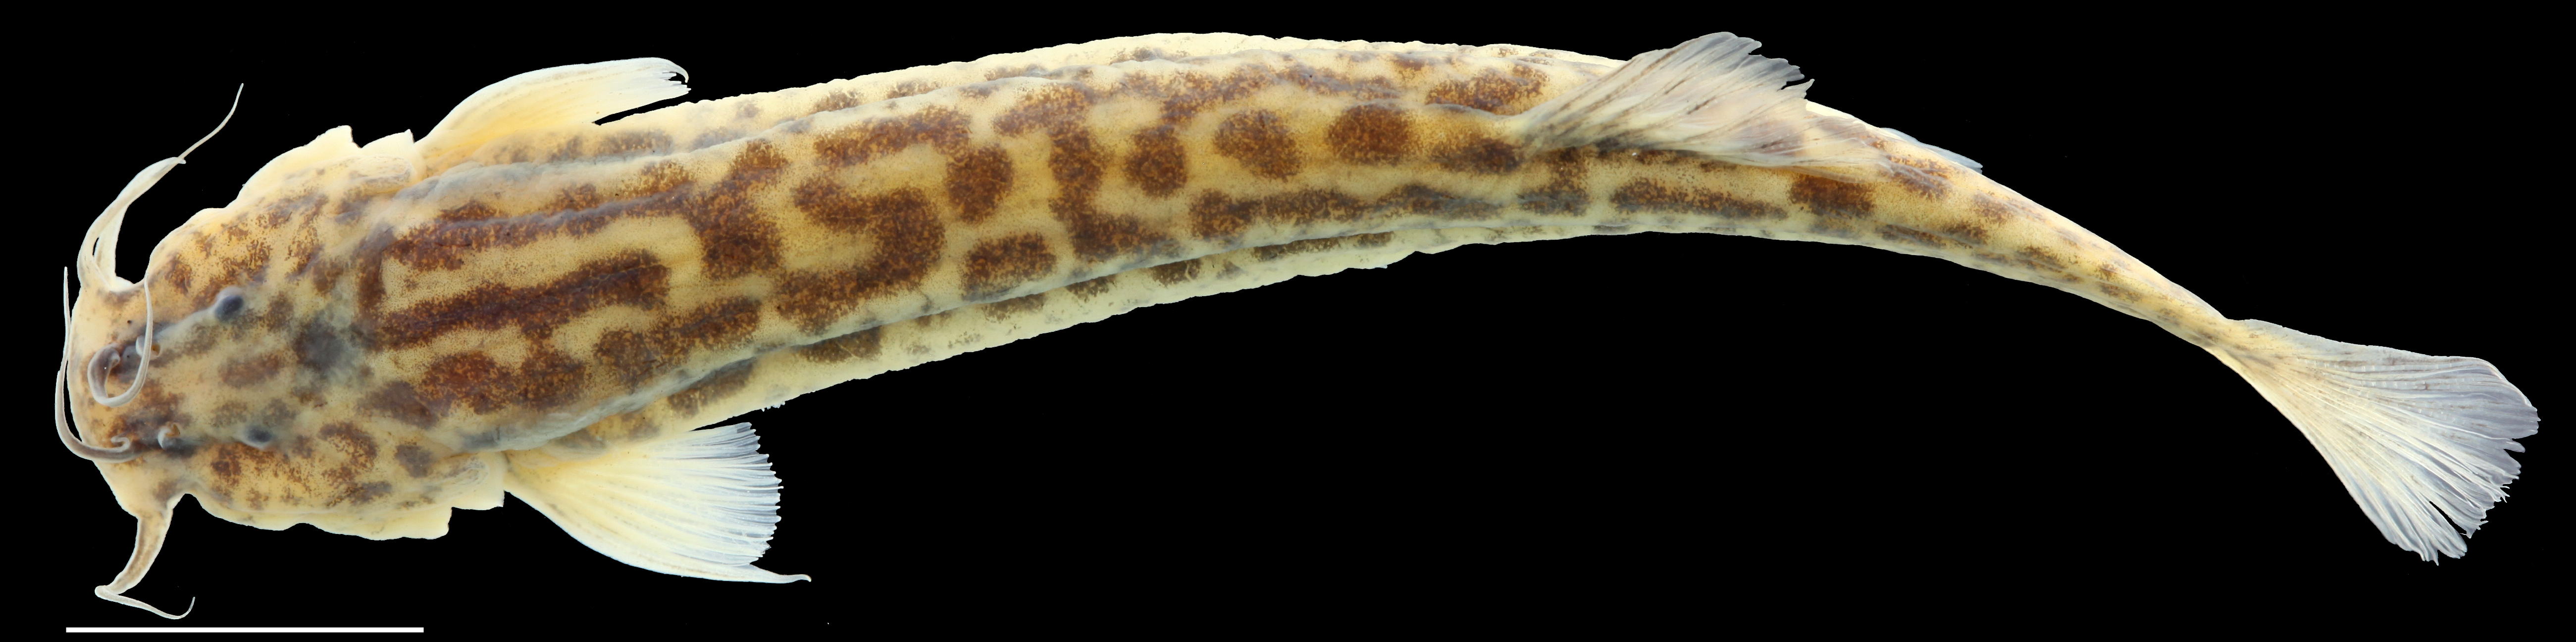 Paratype of <em>Trichomycterus torcoromaensis</em>, IAvH-P-13422_Dorsal, 62.2 mm SL (scale bar = 1 cm). Photograph by C. DoNascimiento